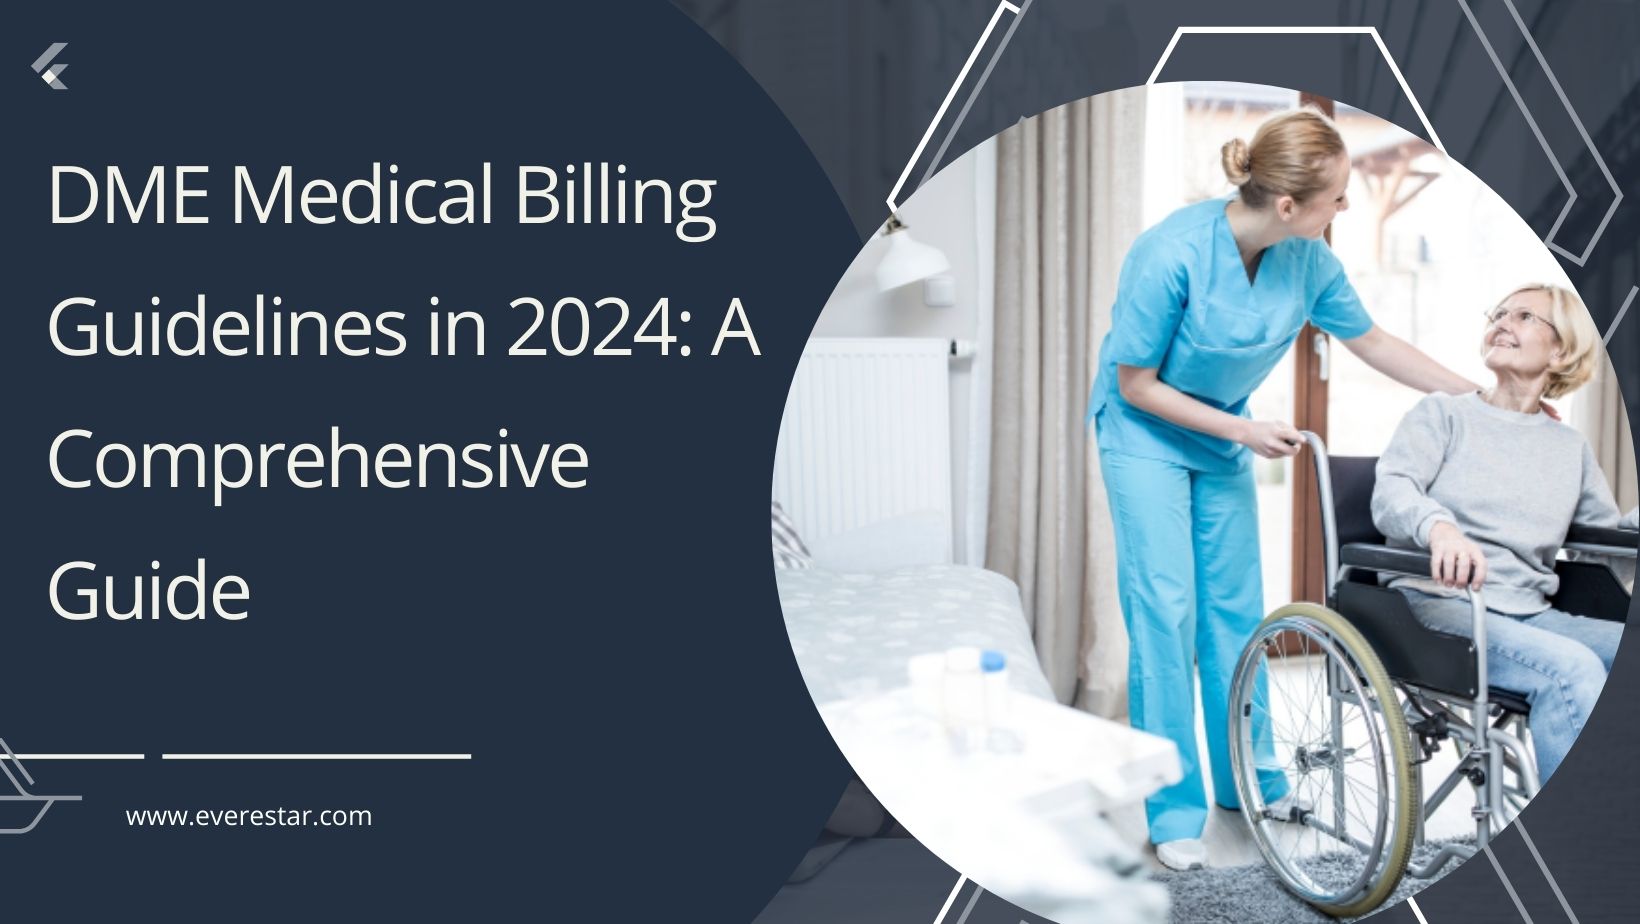 DME Medical Billing Guidelines in 2024 A Comprehensive Guide